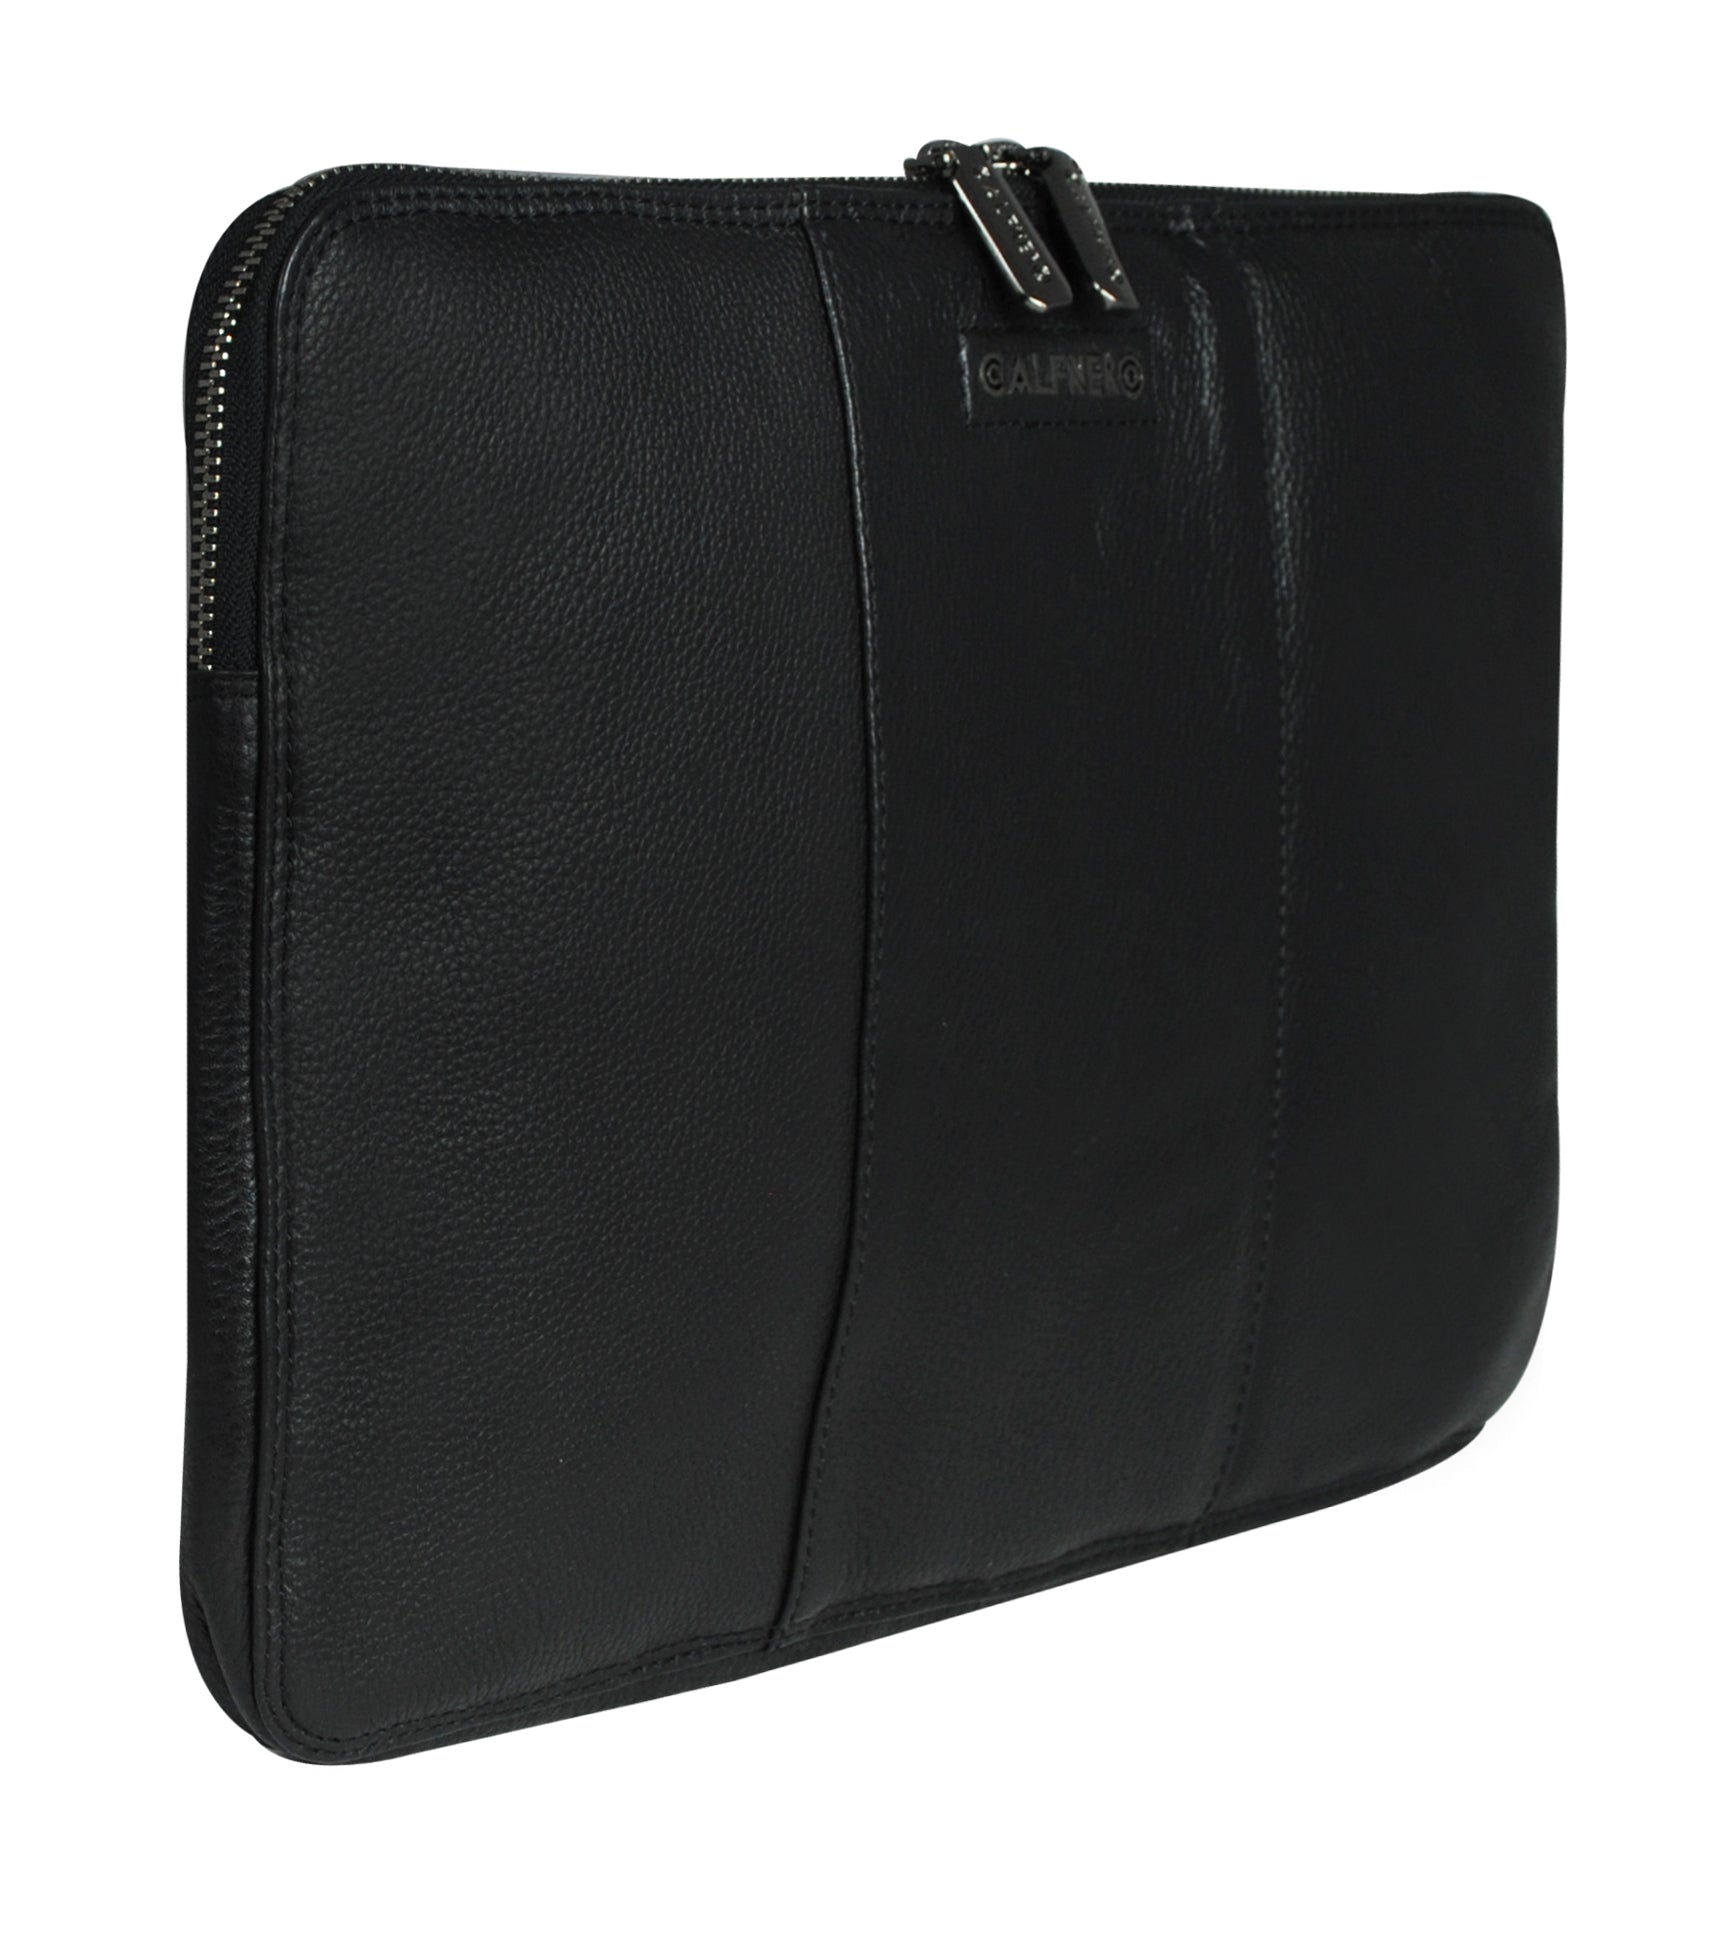 Saddleback Leather Hard Leather iPad Pro Case review - The Gadgeteer